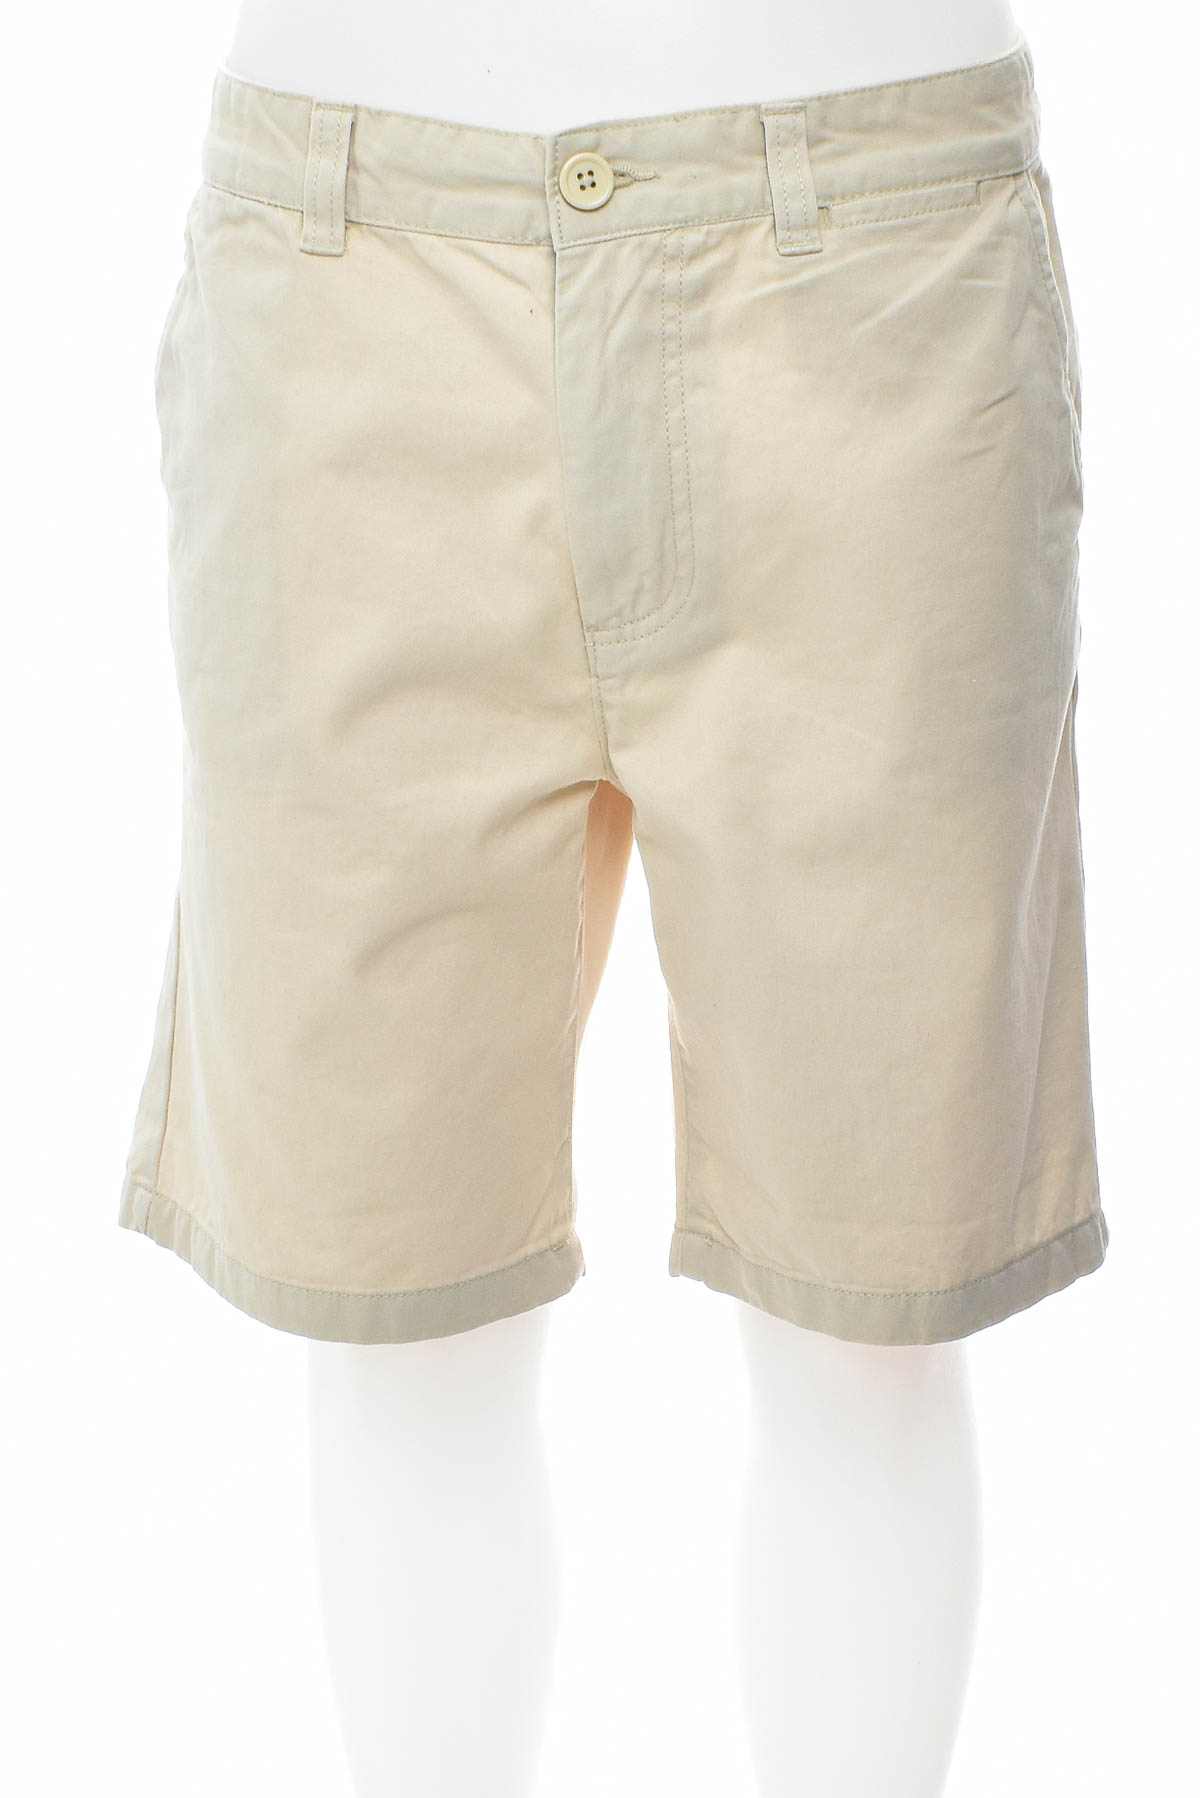 Men's shorts - Boohoo MAN - 0